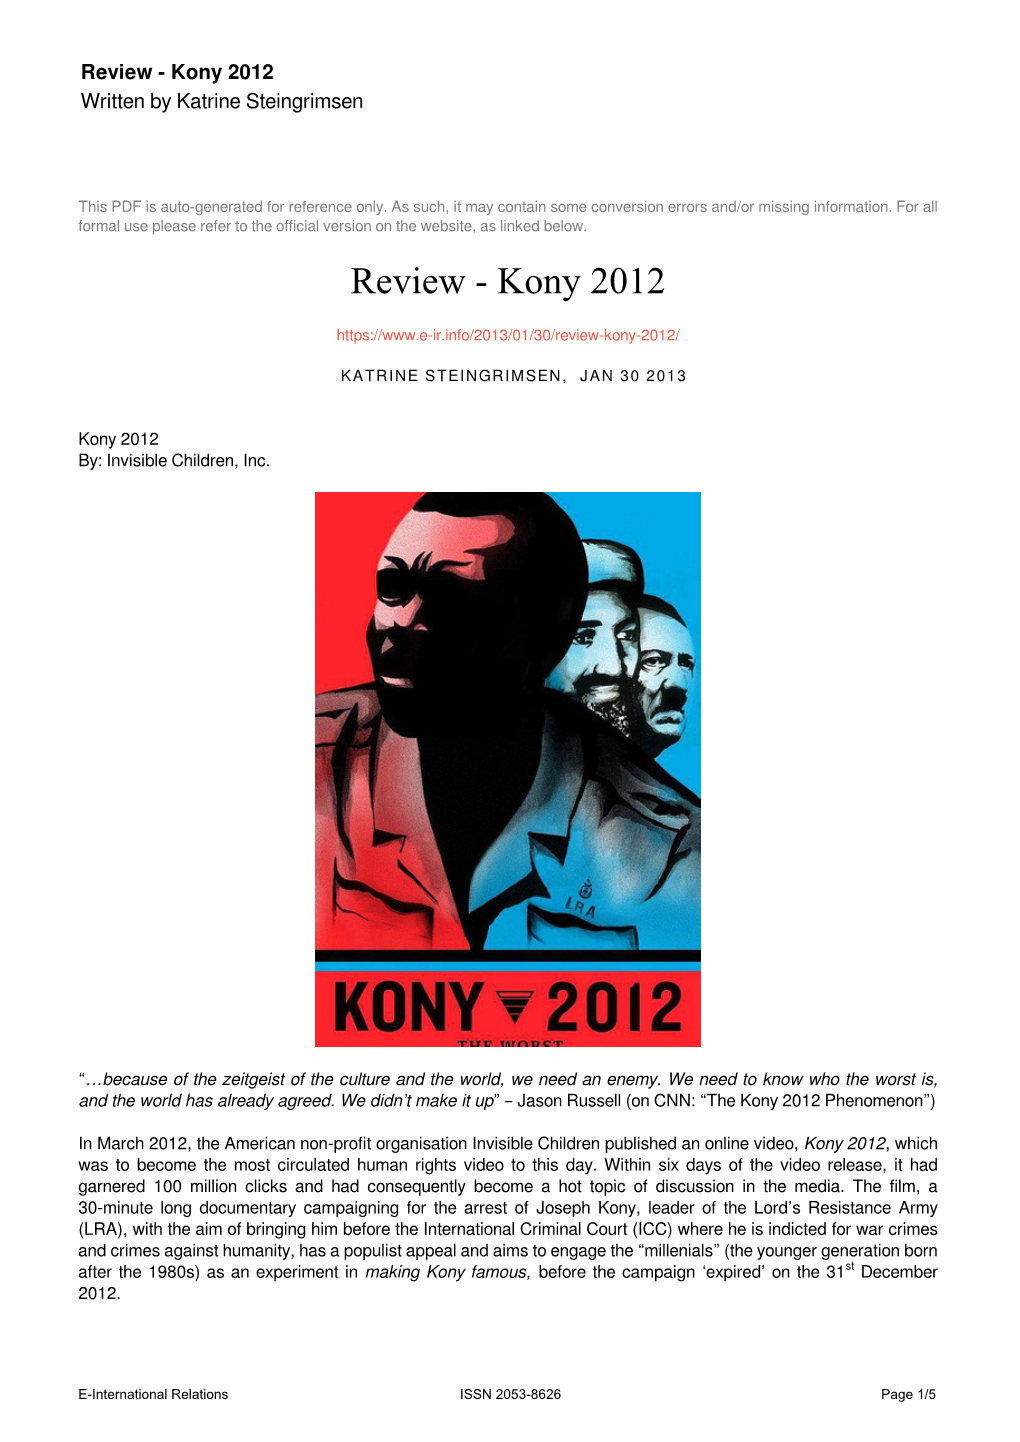 Kony 2012 Written by Katrine Steingrimsen